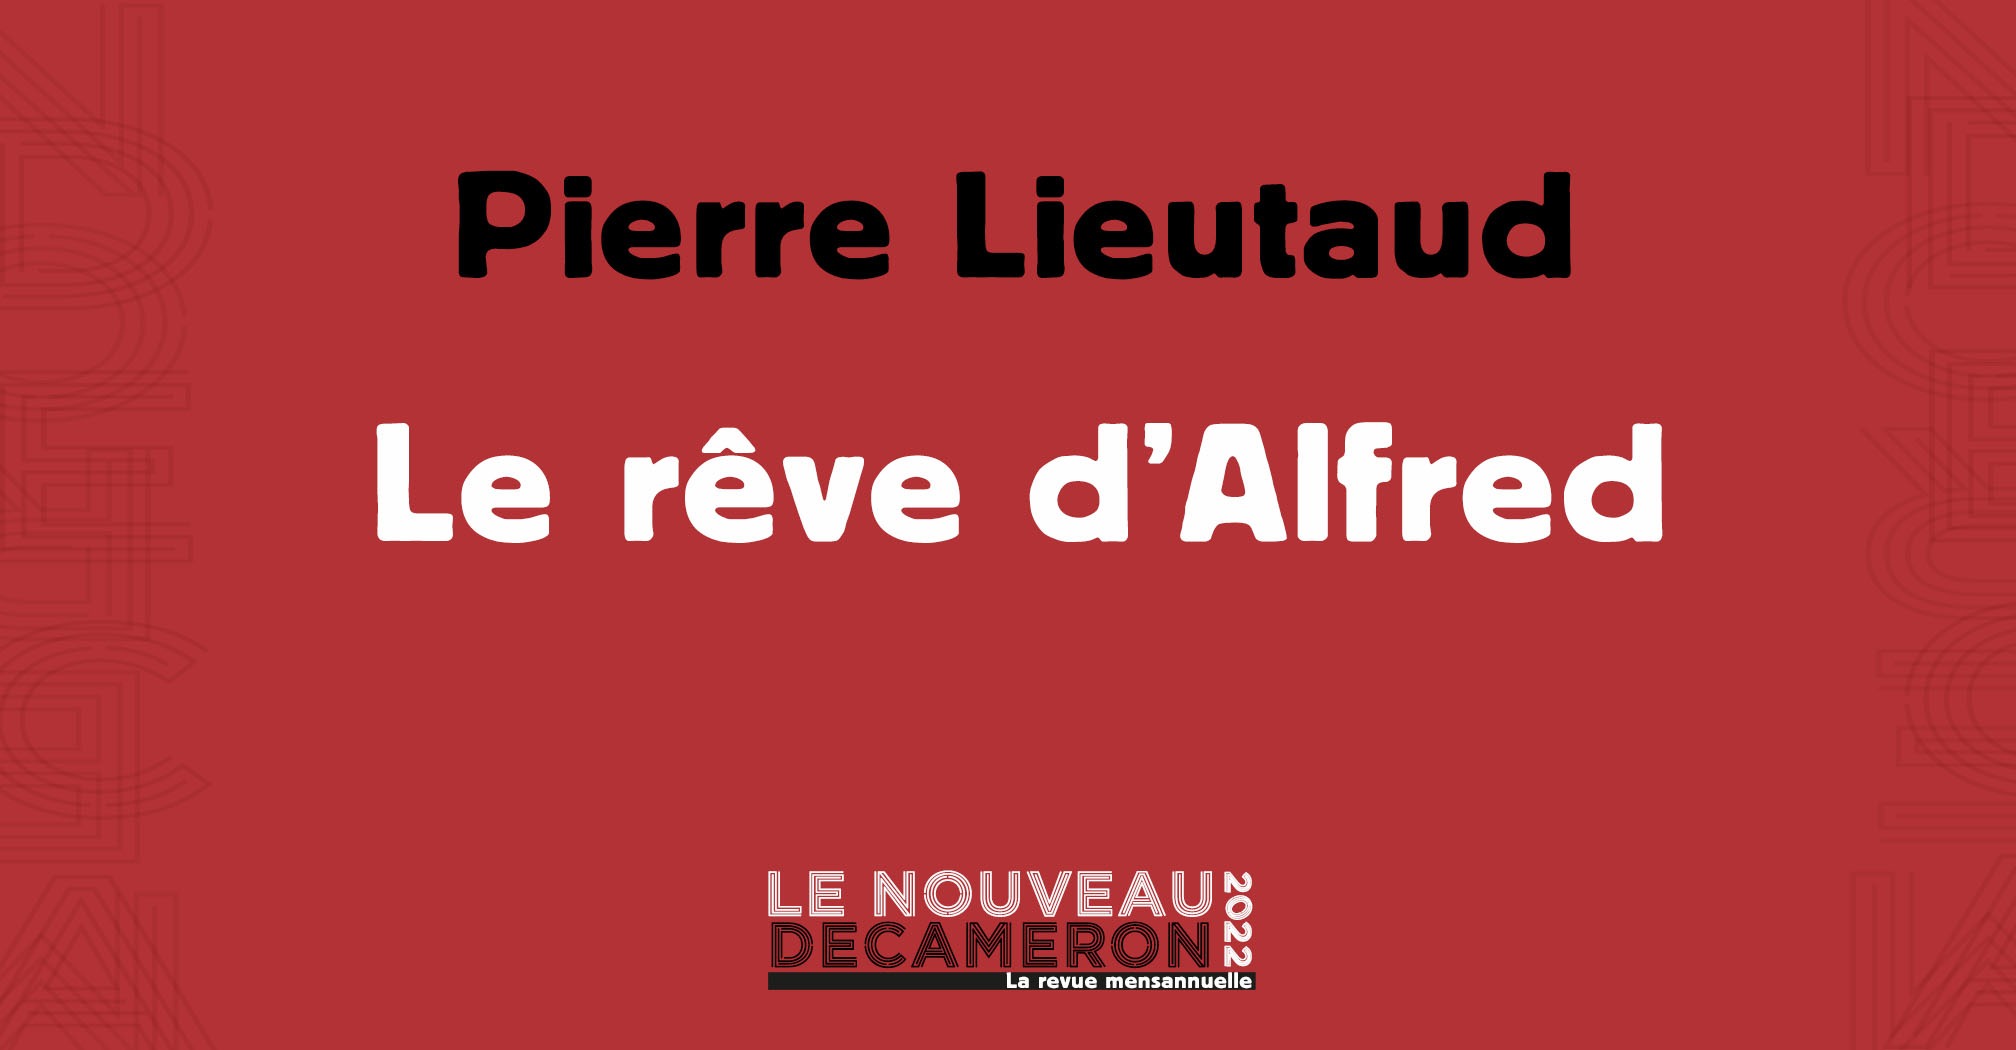 Pierre Lieutaud - Le rêve d'Alfred